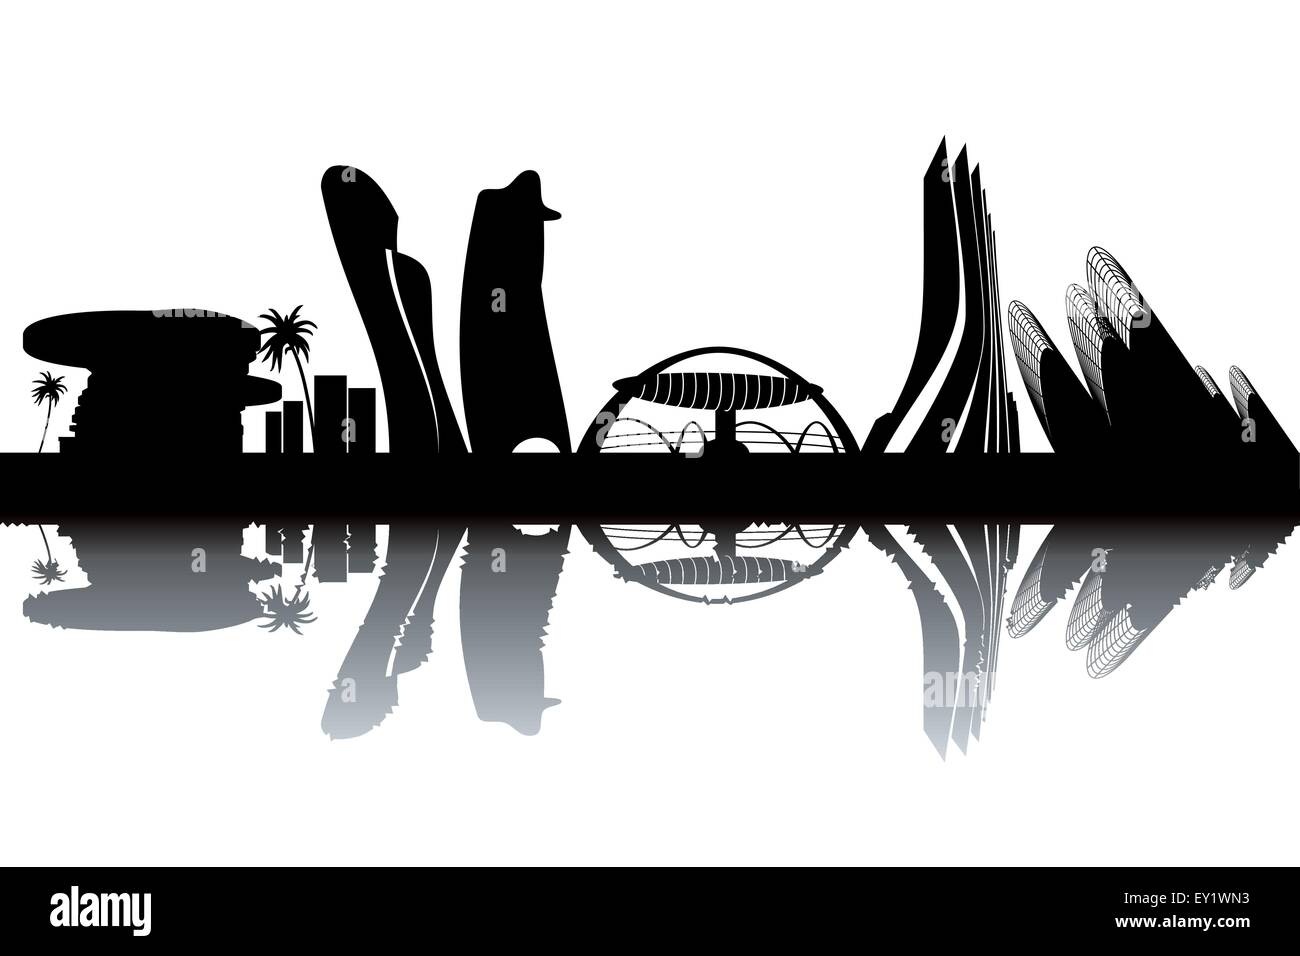 Abu Dhabi skyline - black and white vector illustration Stock Vector